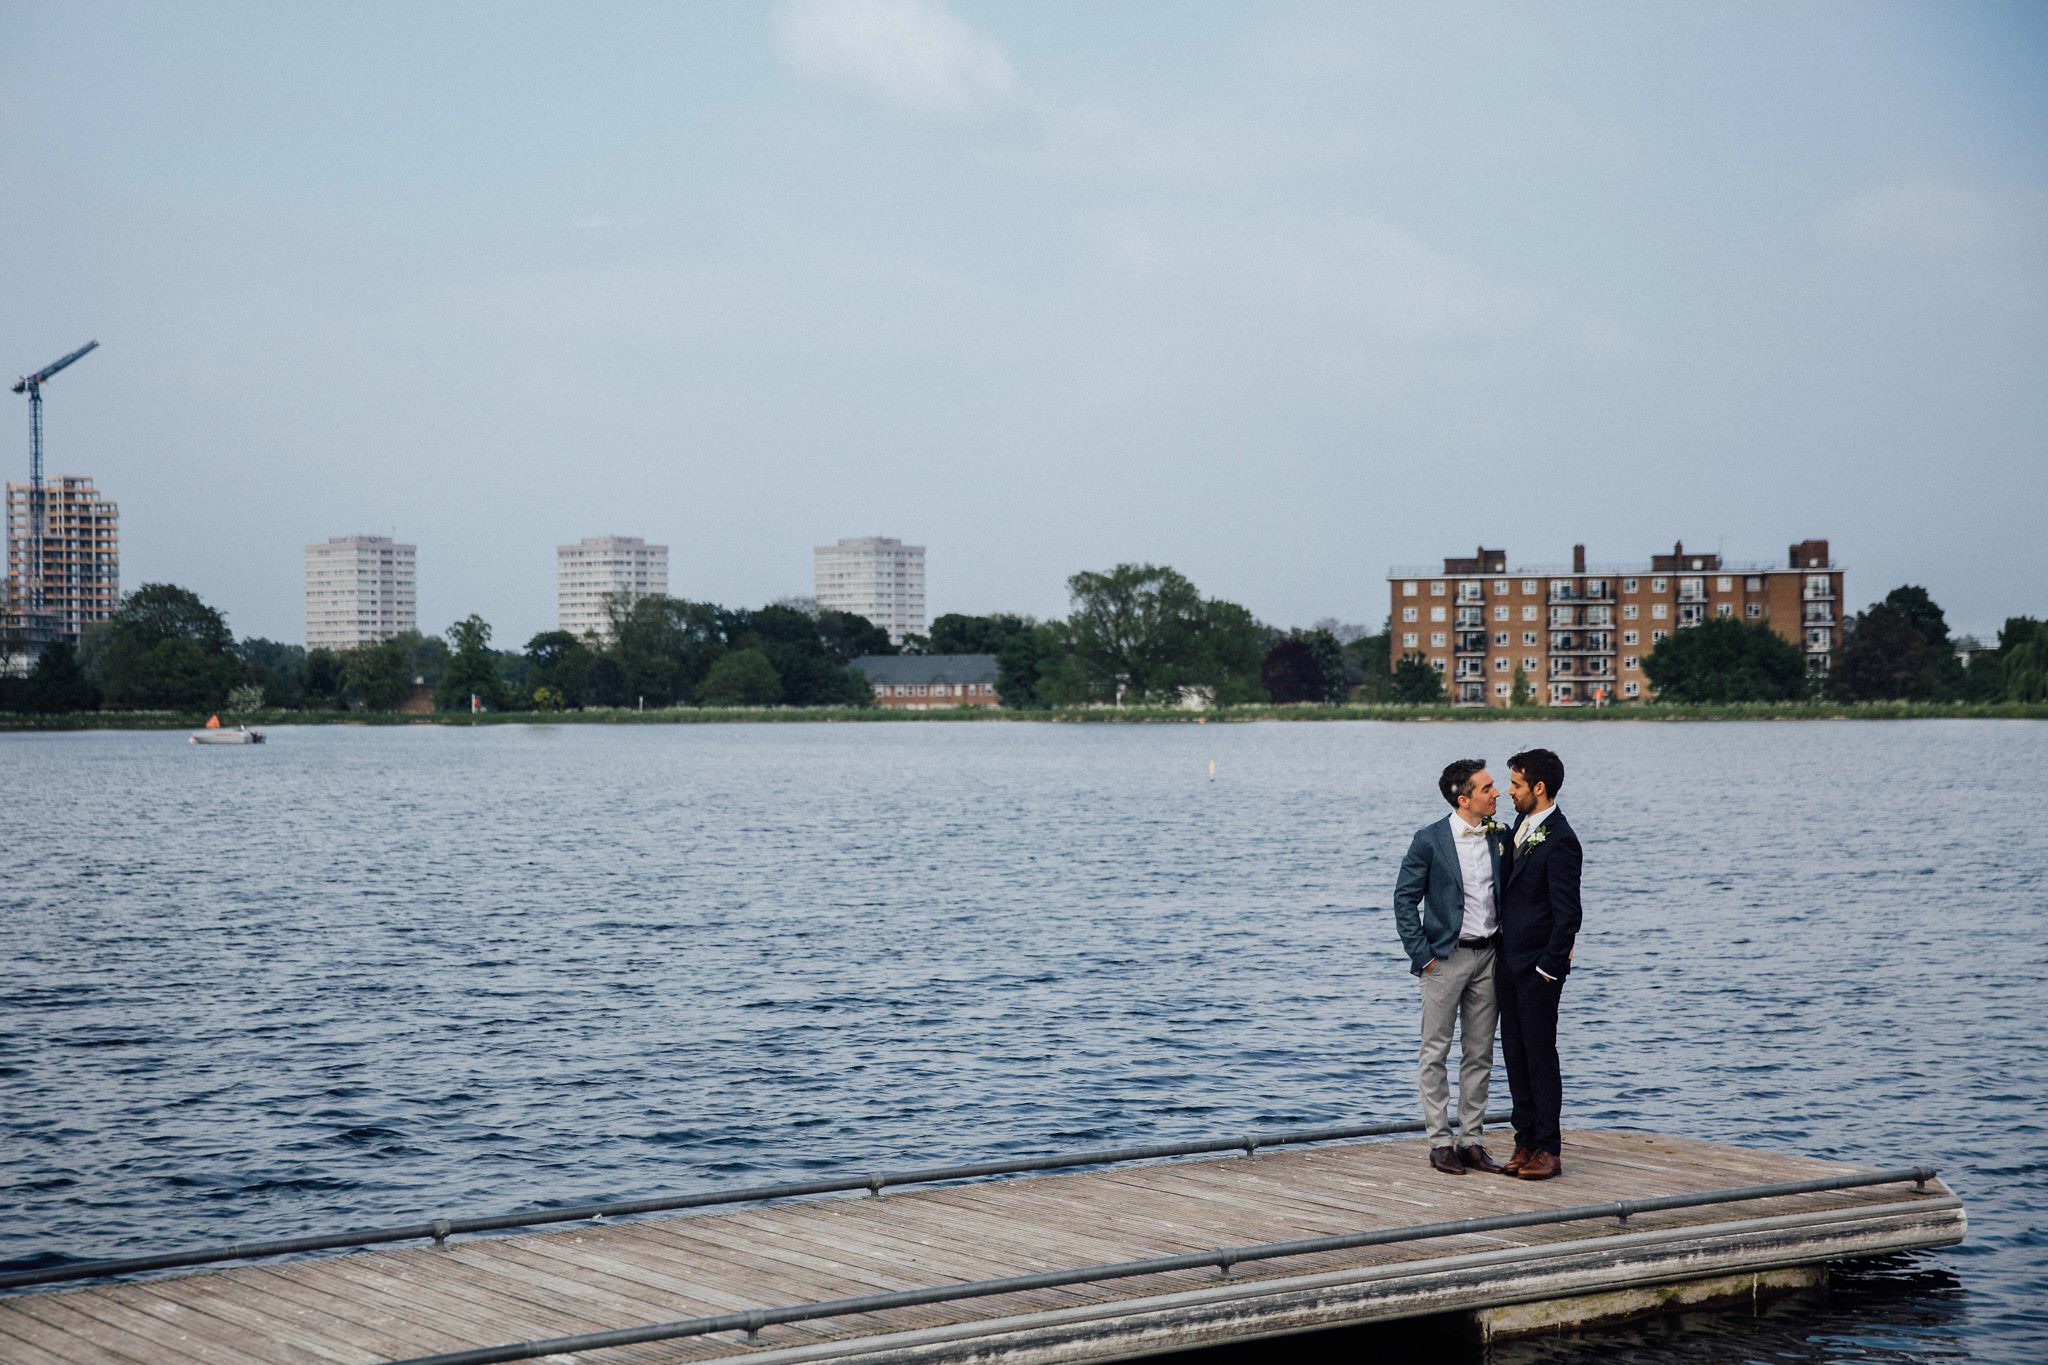 london reservoir backdrop for same sex wedding portraits